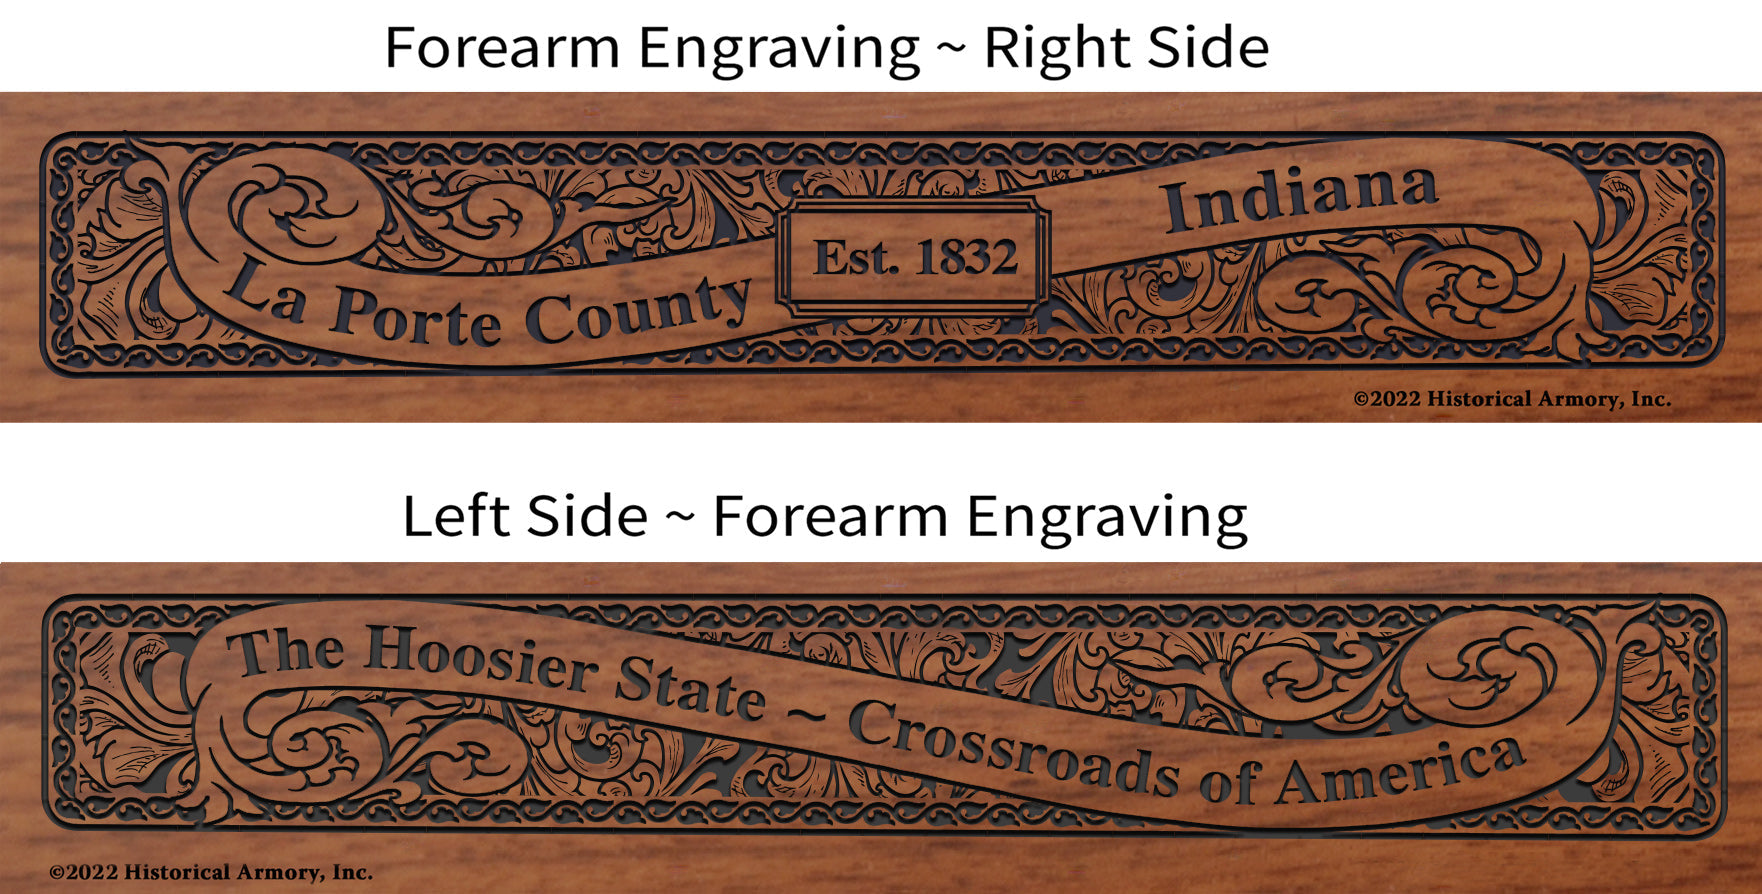 La Porte County Indiana Engraved Rifle Forearm